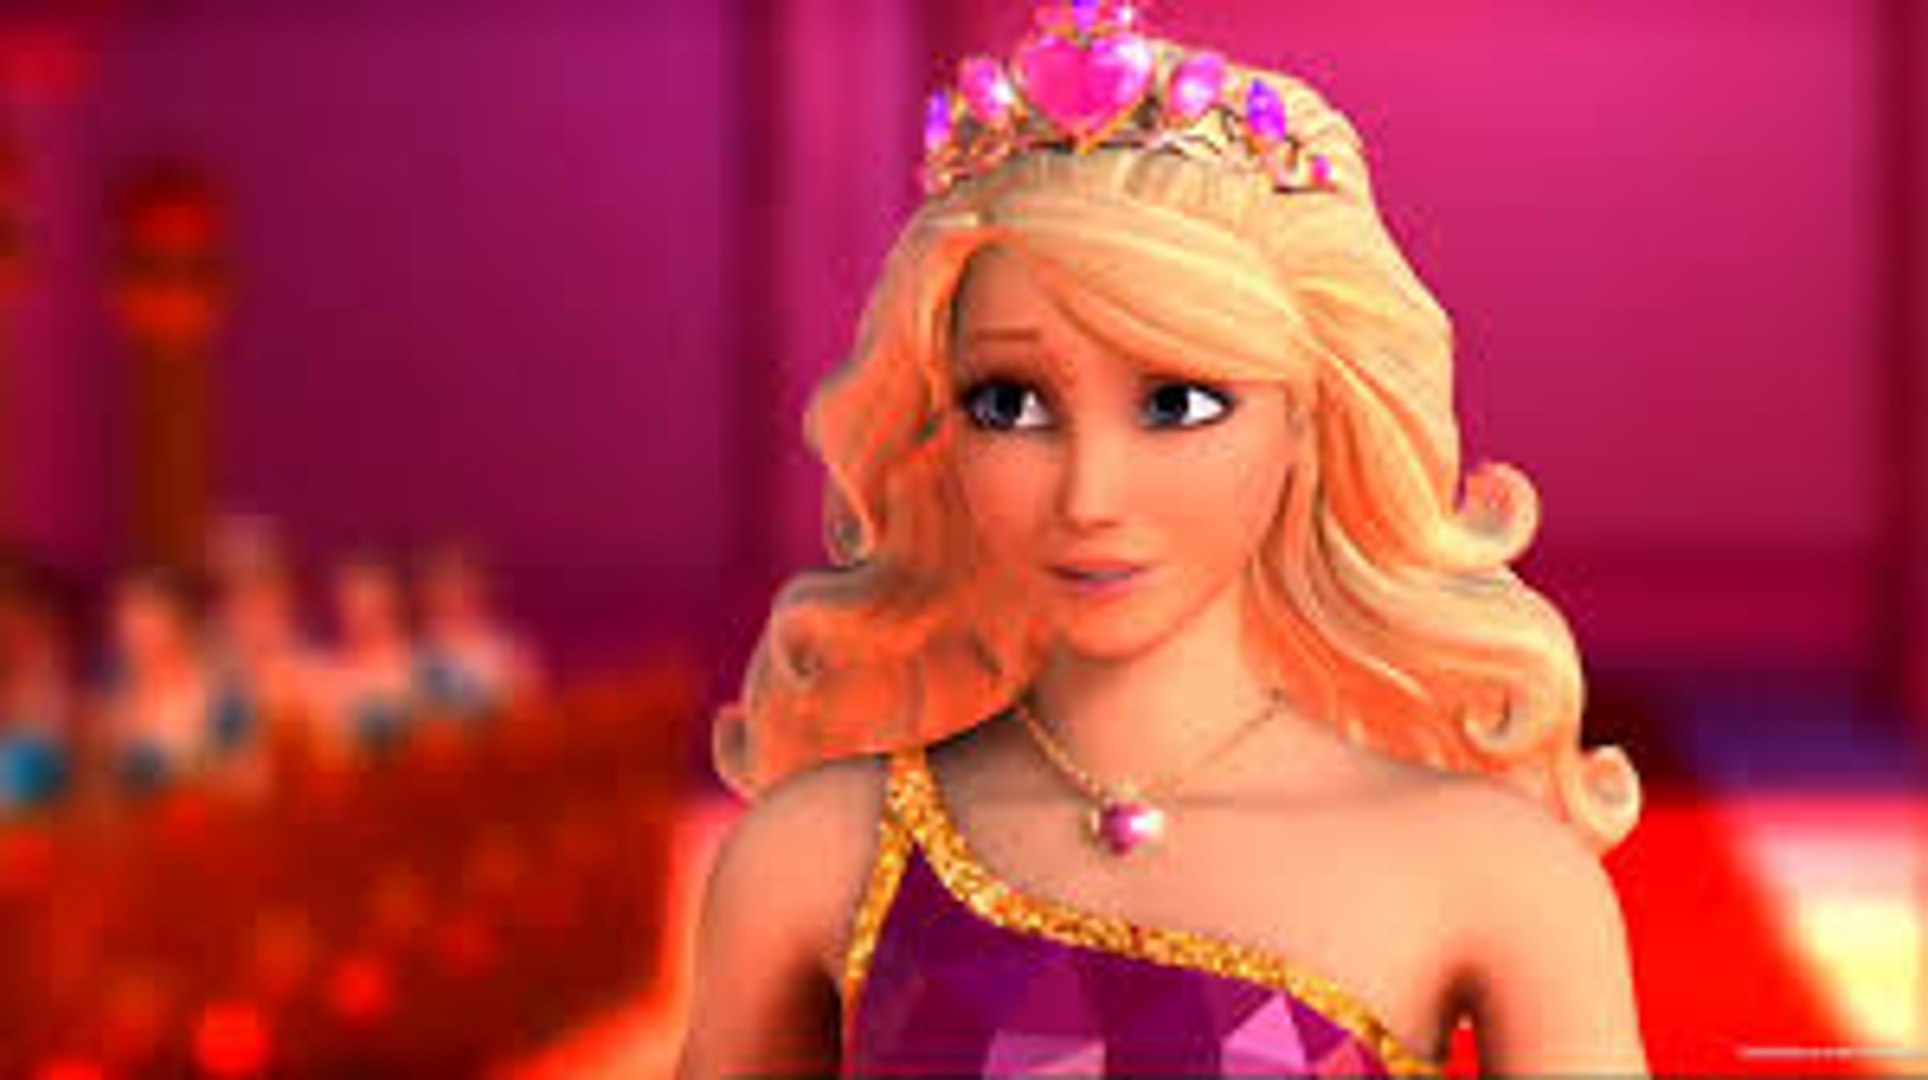 Barbie Life In The Dreamhouse Suomi Leirielämää Disney Cartoons Networkmotu patlu cartoon in hindi 2